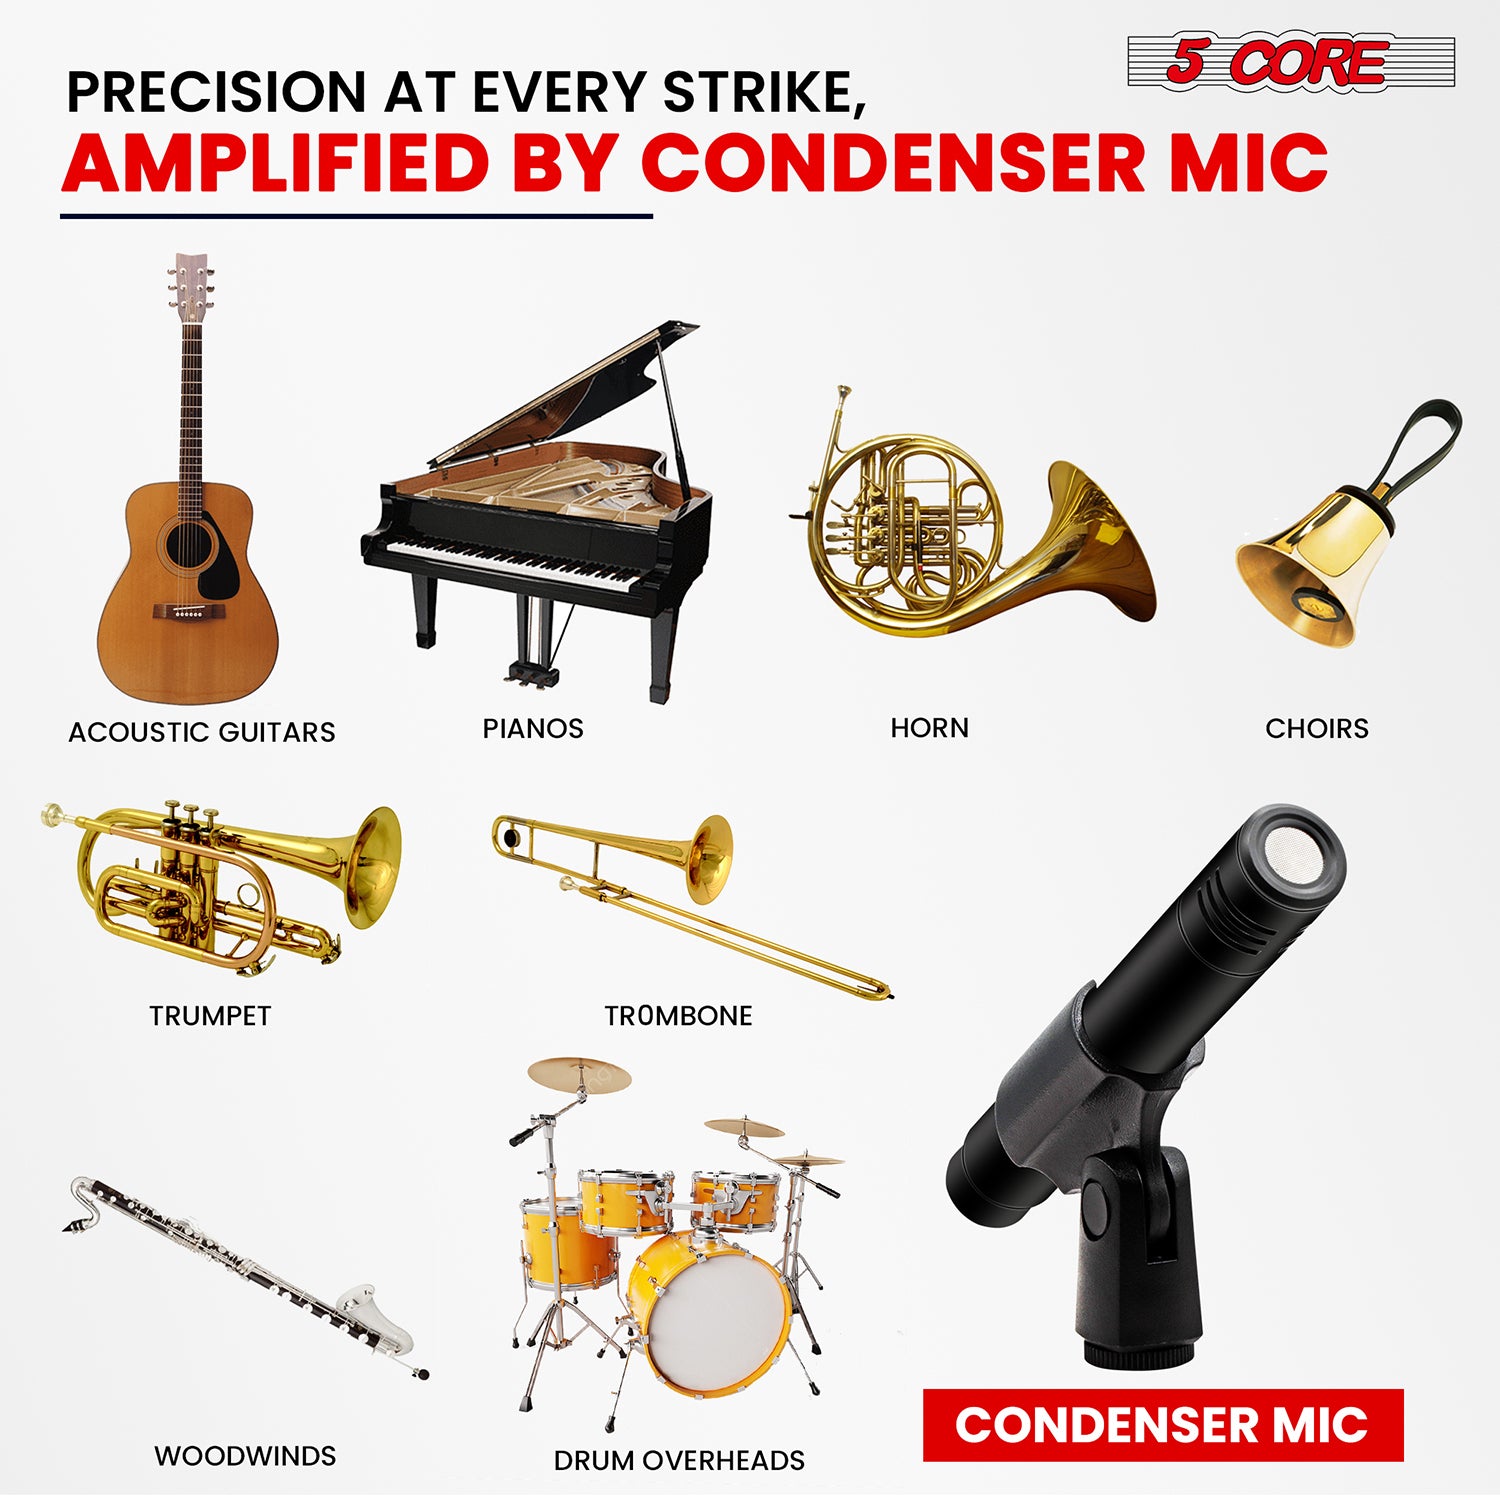 5 Core Dynamic Instrument Microphone Professional XLR Cardioid Uni Directional Pencil Condenser Mic